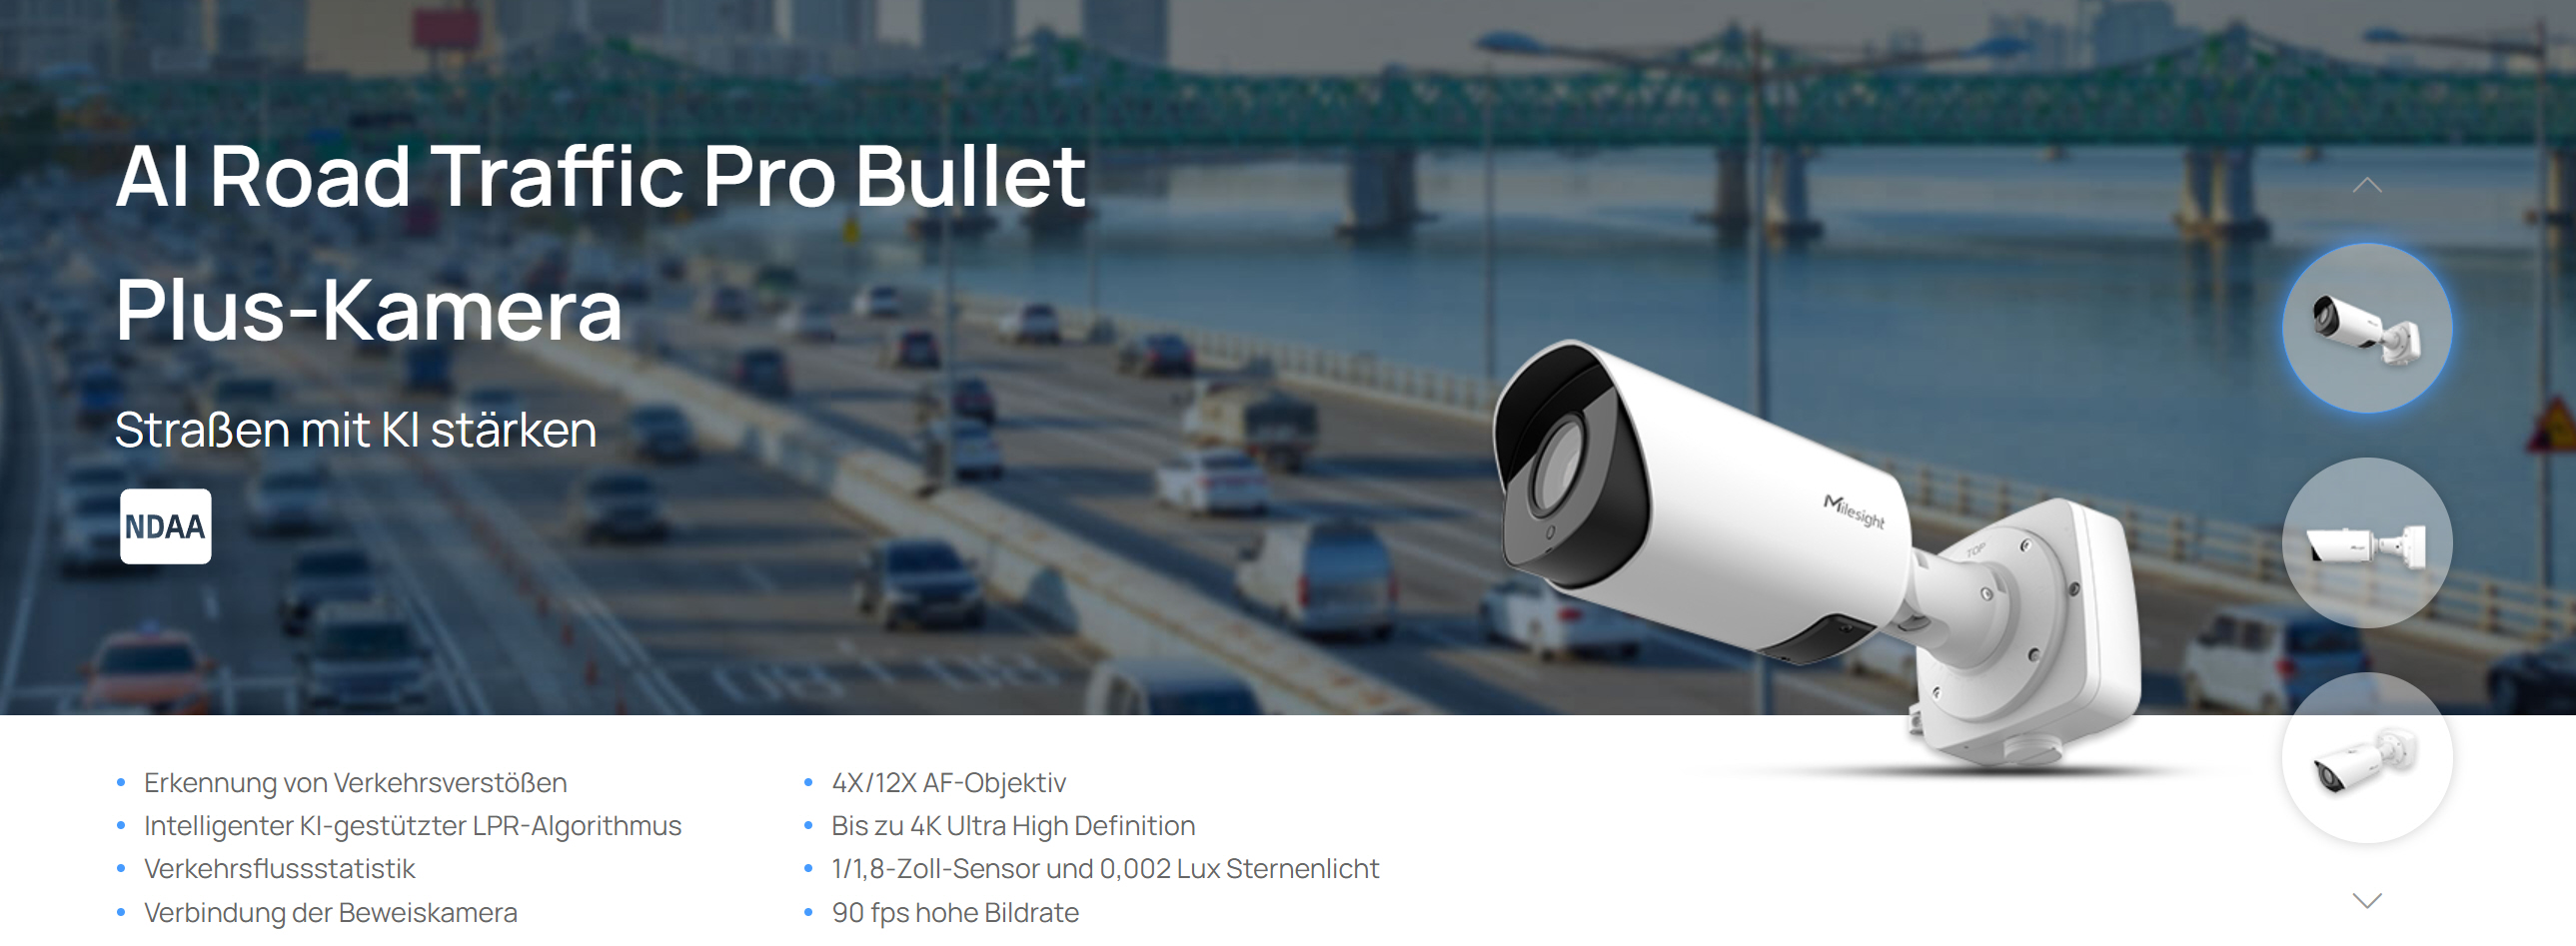 AI Road Traffic Pro Bullet Plus Kamera